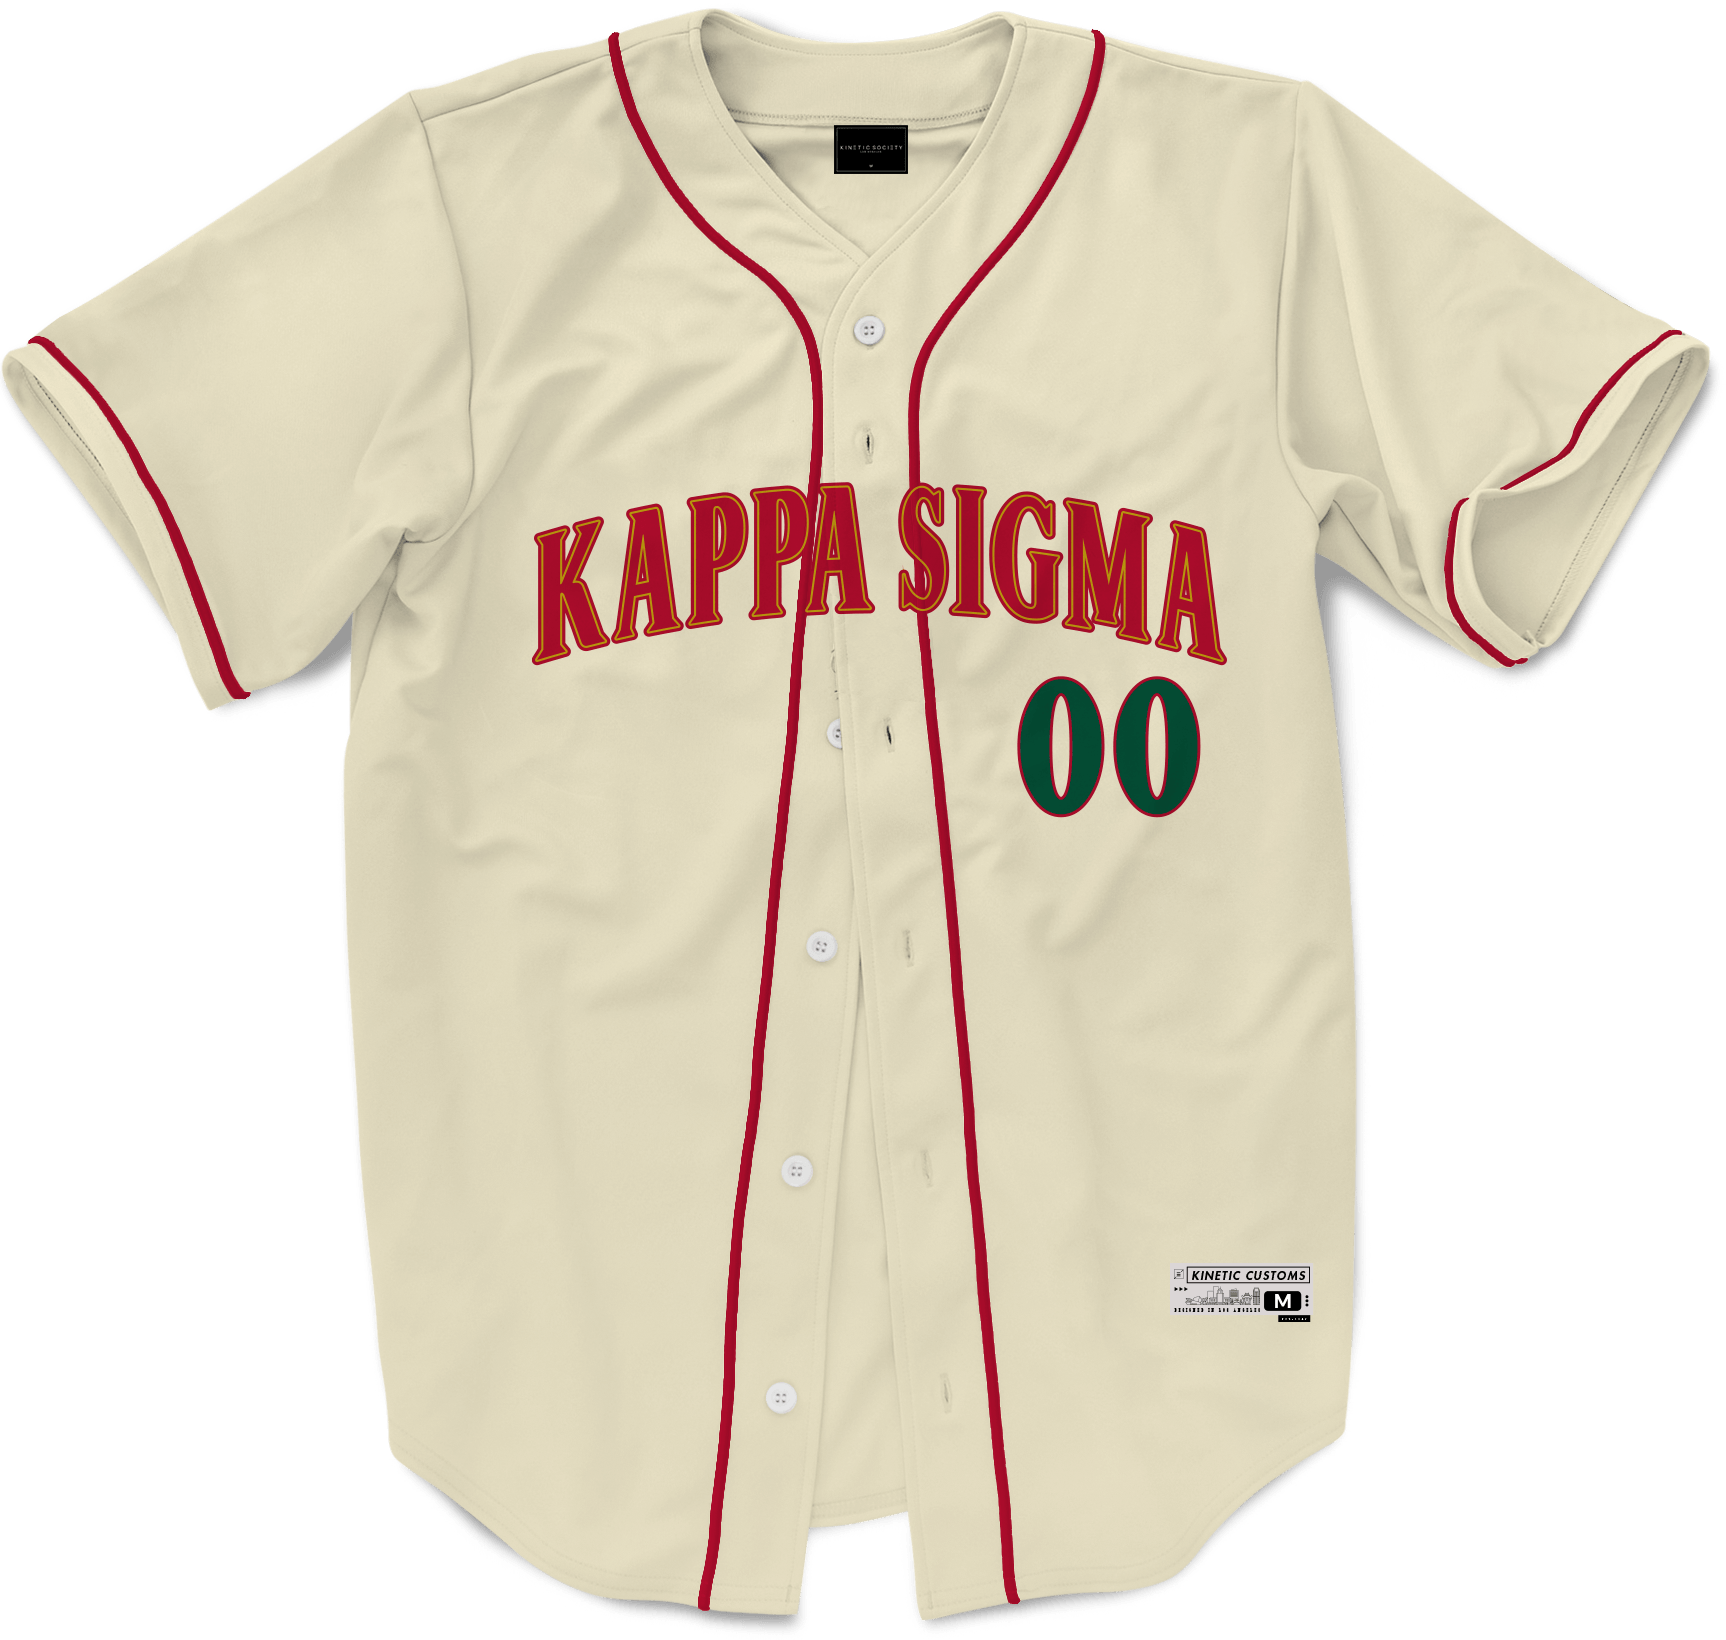 Kappa Sigma - Cream Baseball Jersey Premium Baseball Kinetic Society LLC 